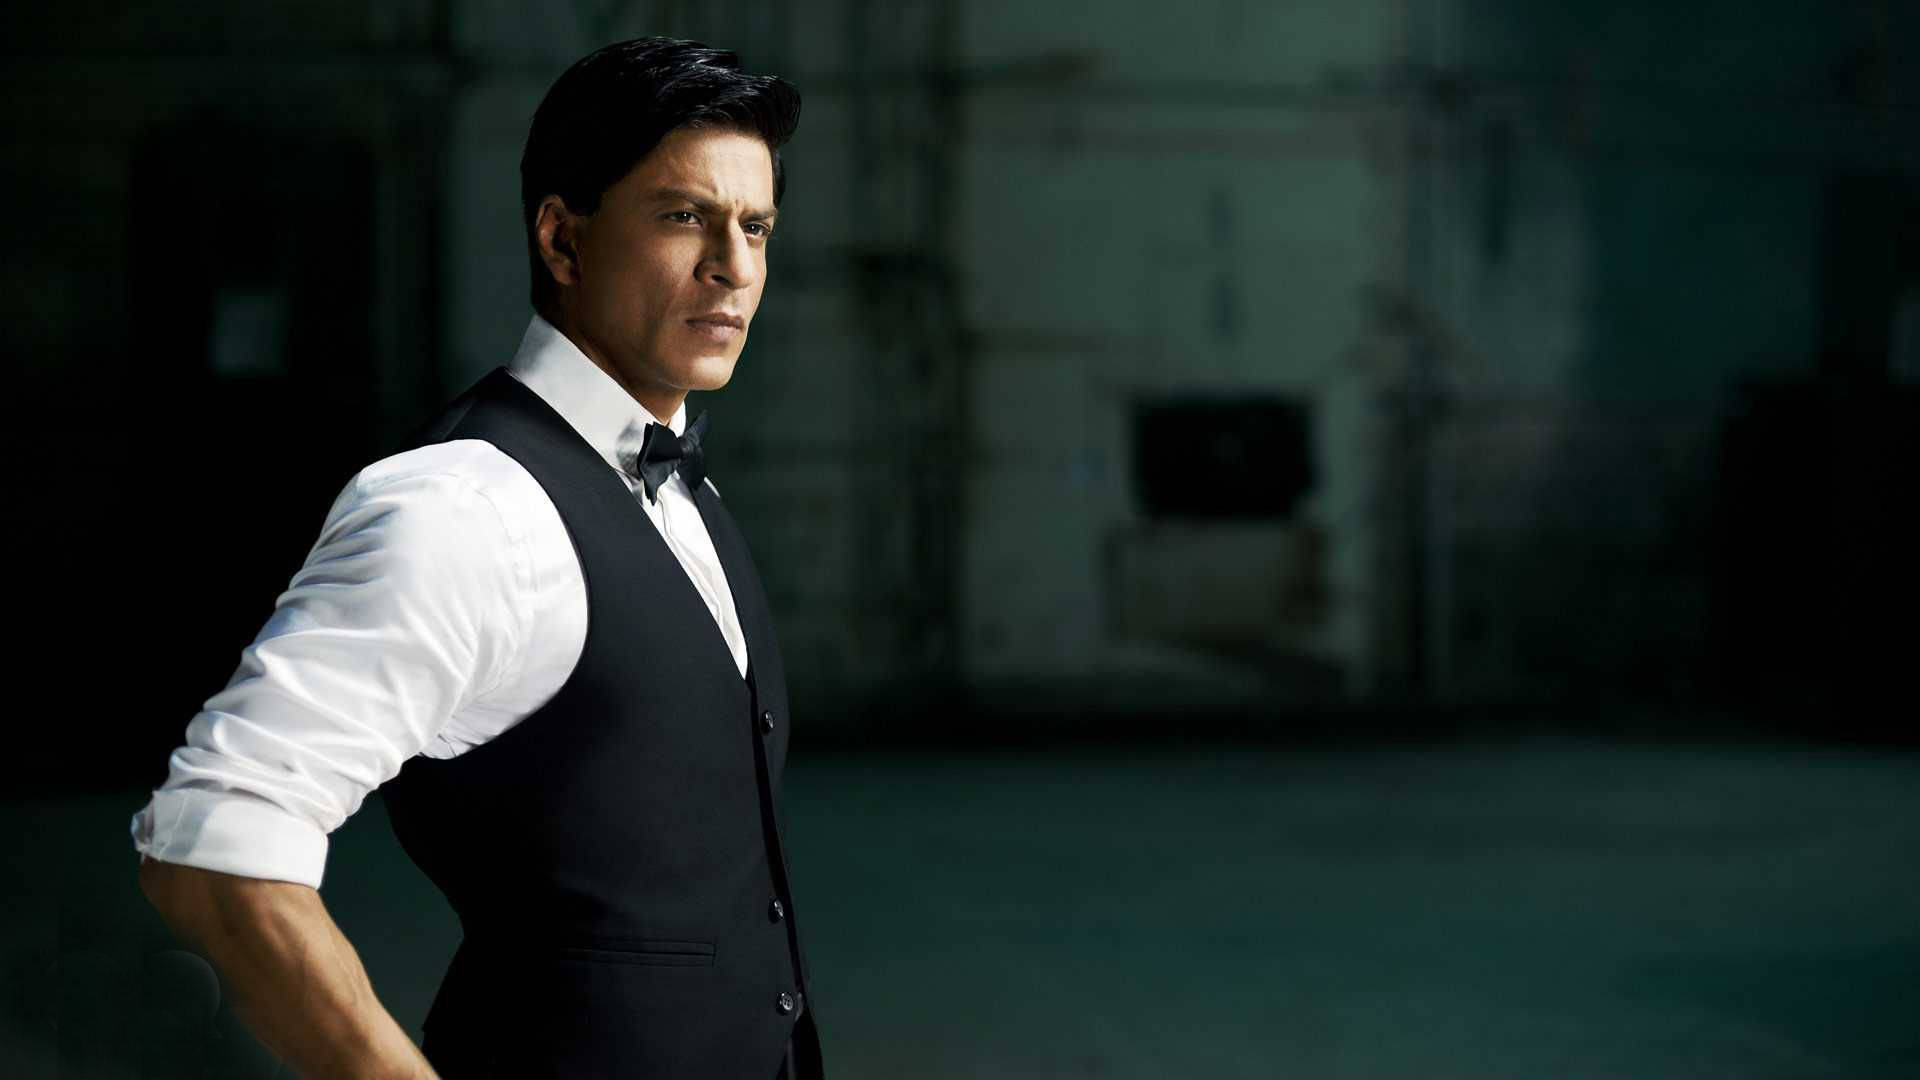 Shah Rukh Khan GQ Vest Outfit Wallpaper